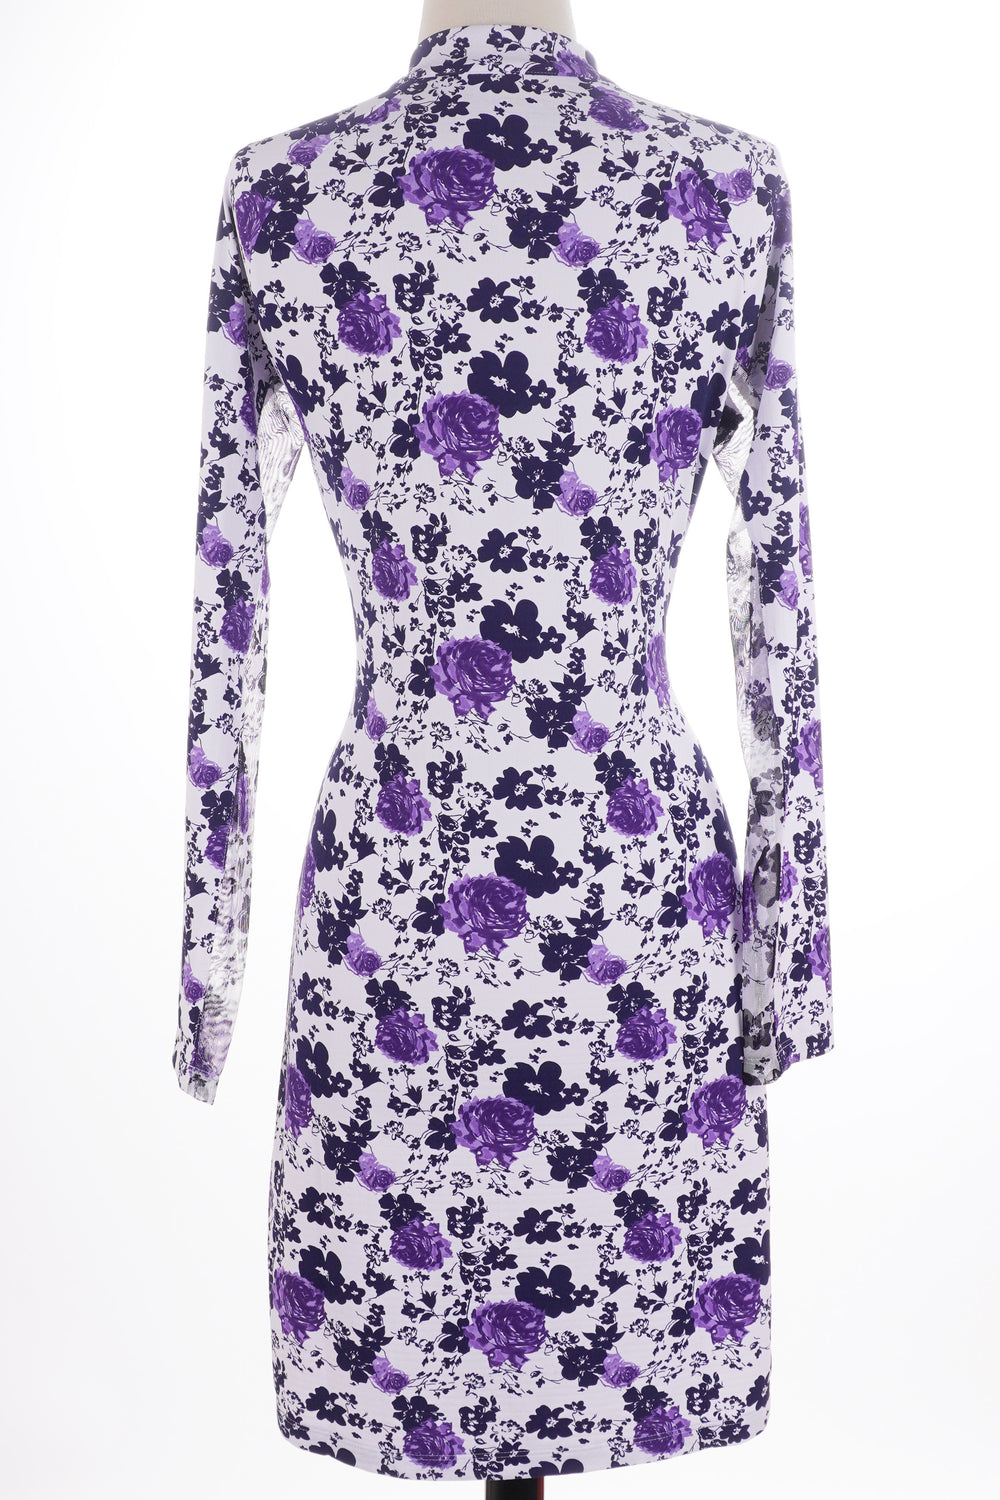 IBKUL Purple Rose Long Sleeve Dress - Size Small - Skorzie